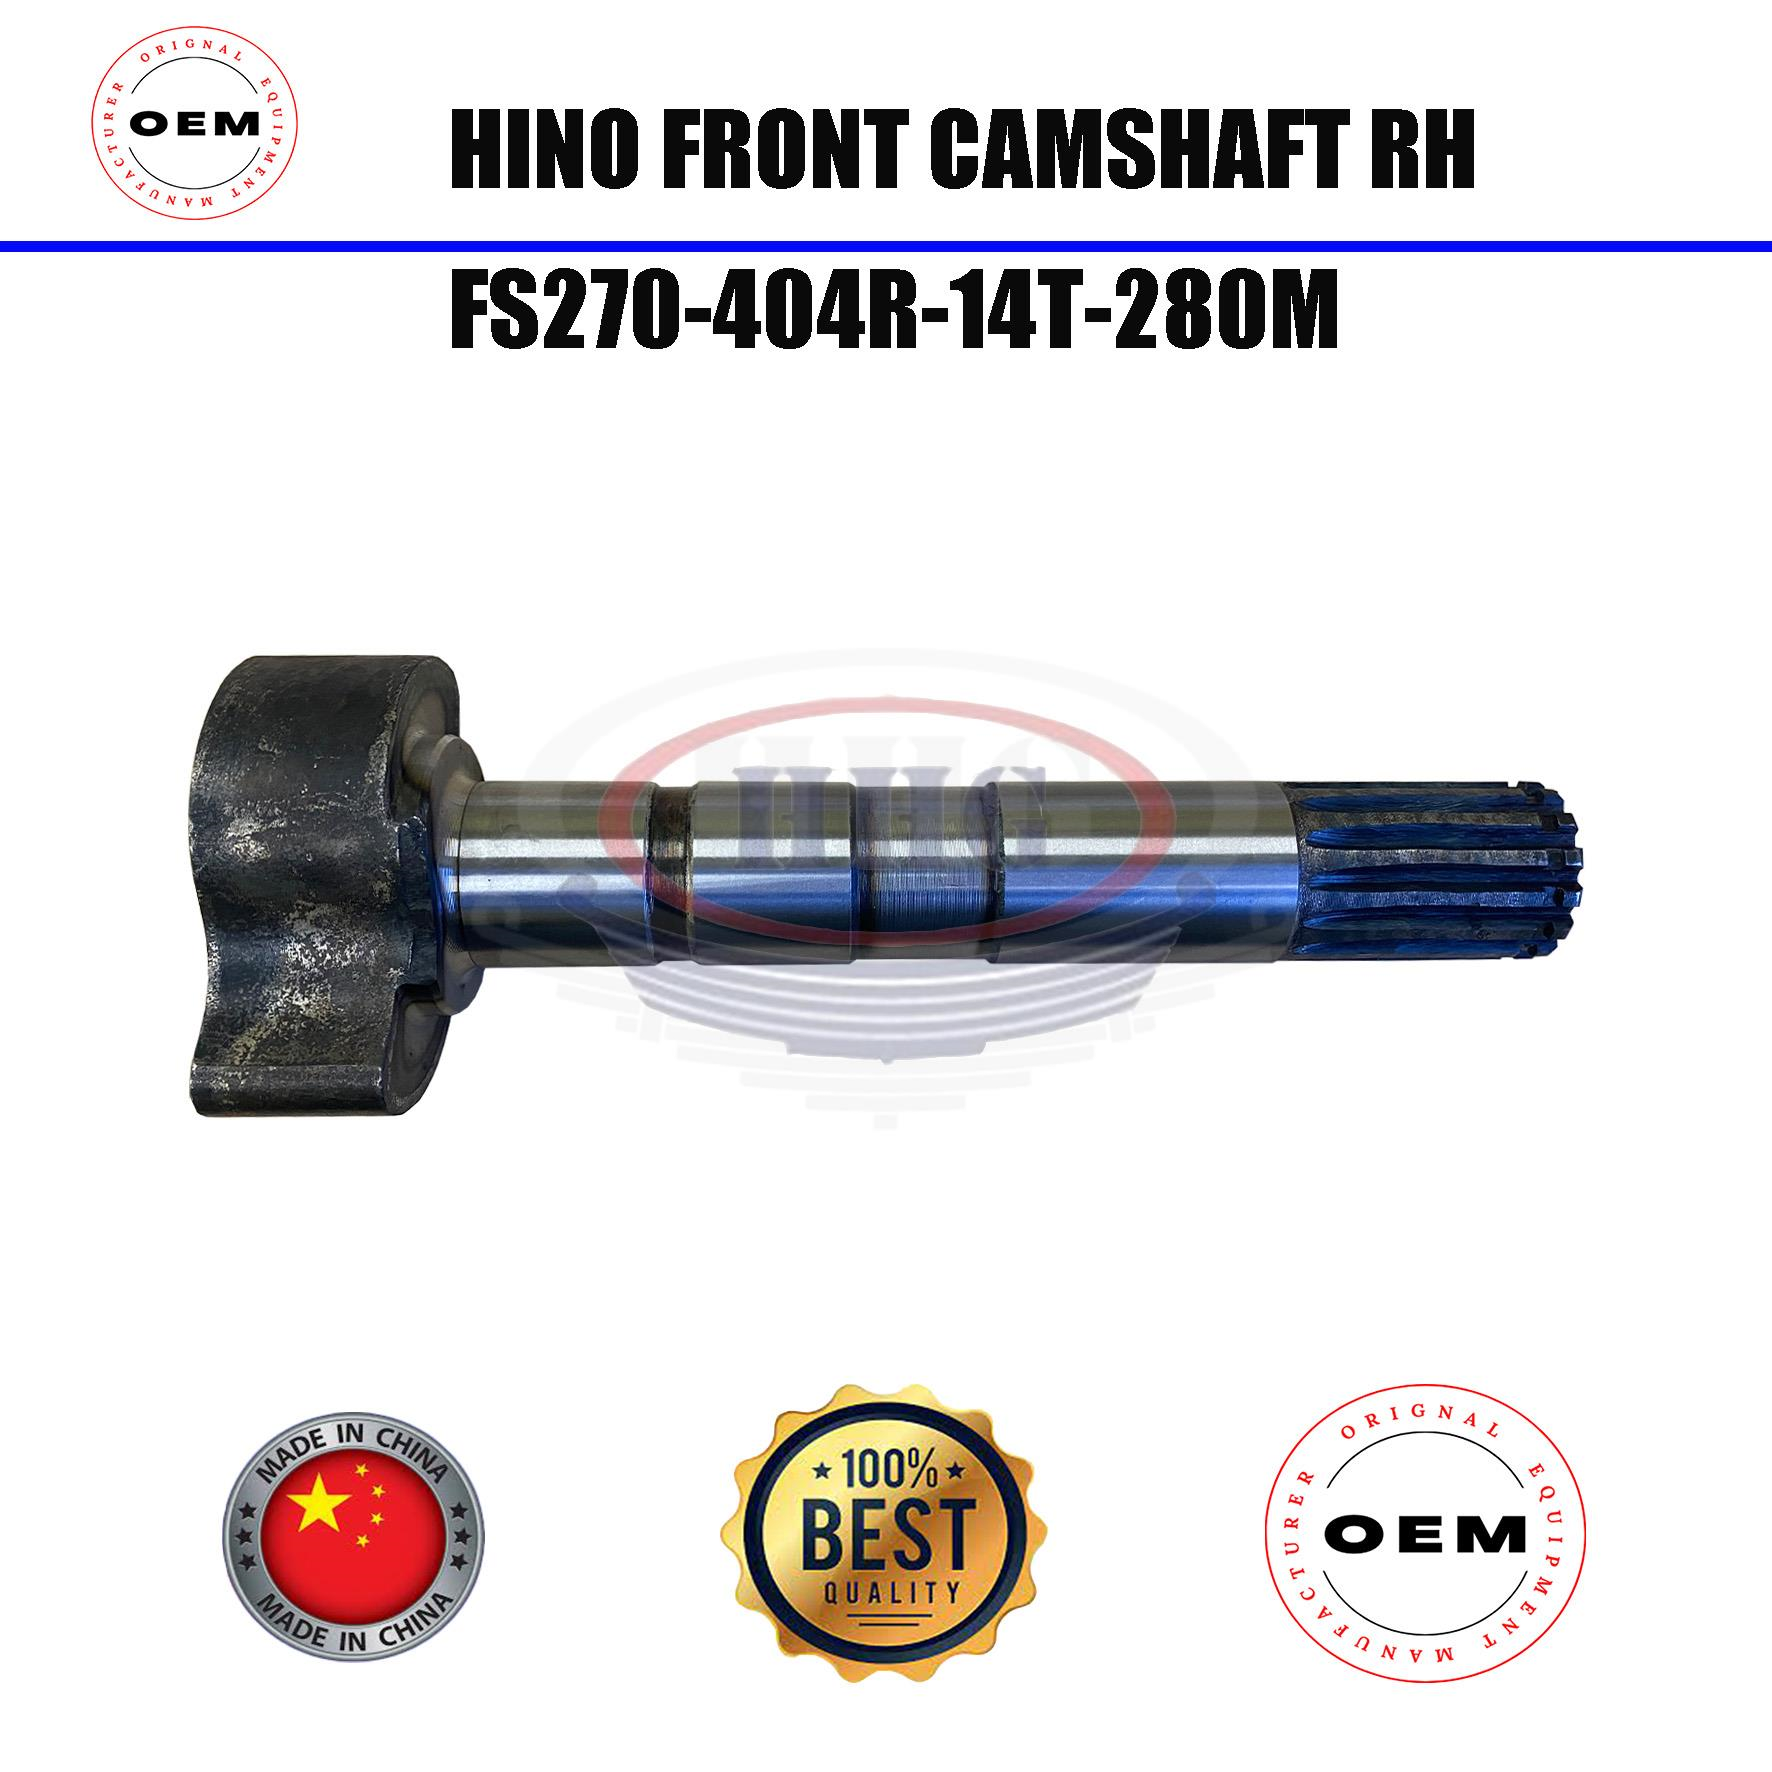 OEM Hino Profia Front Camshaft RH (FS270-404R-14T-280M)